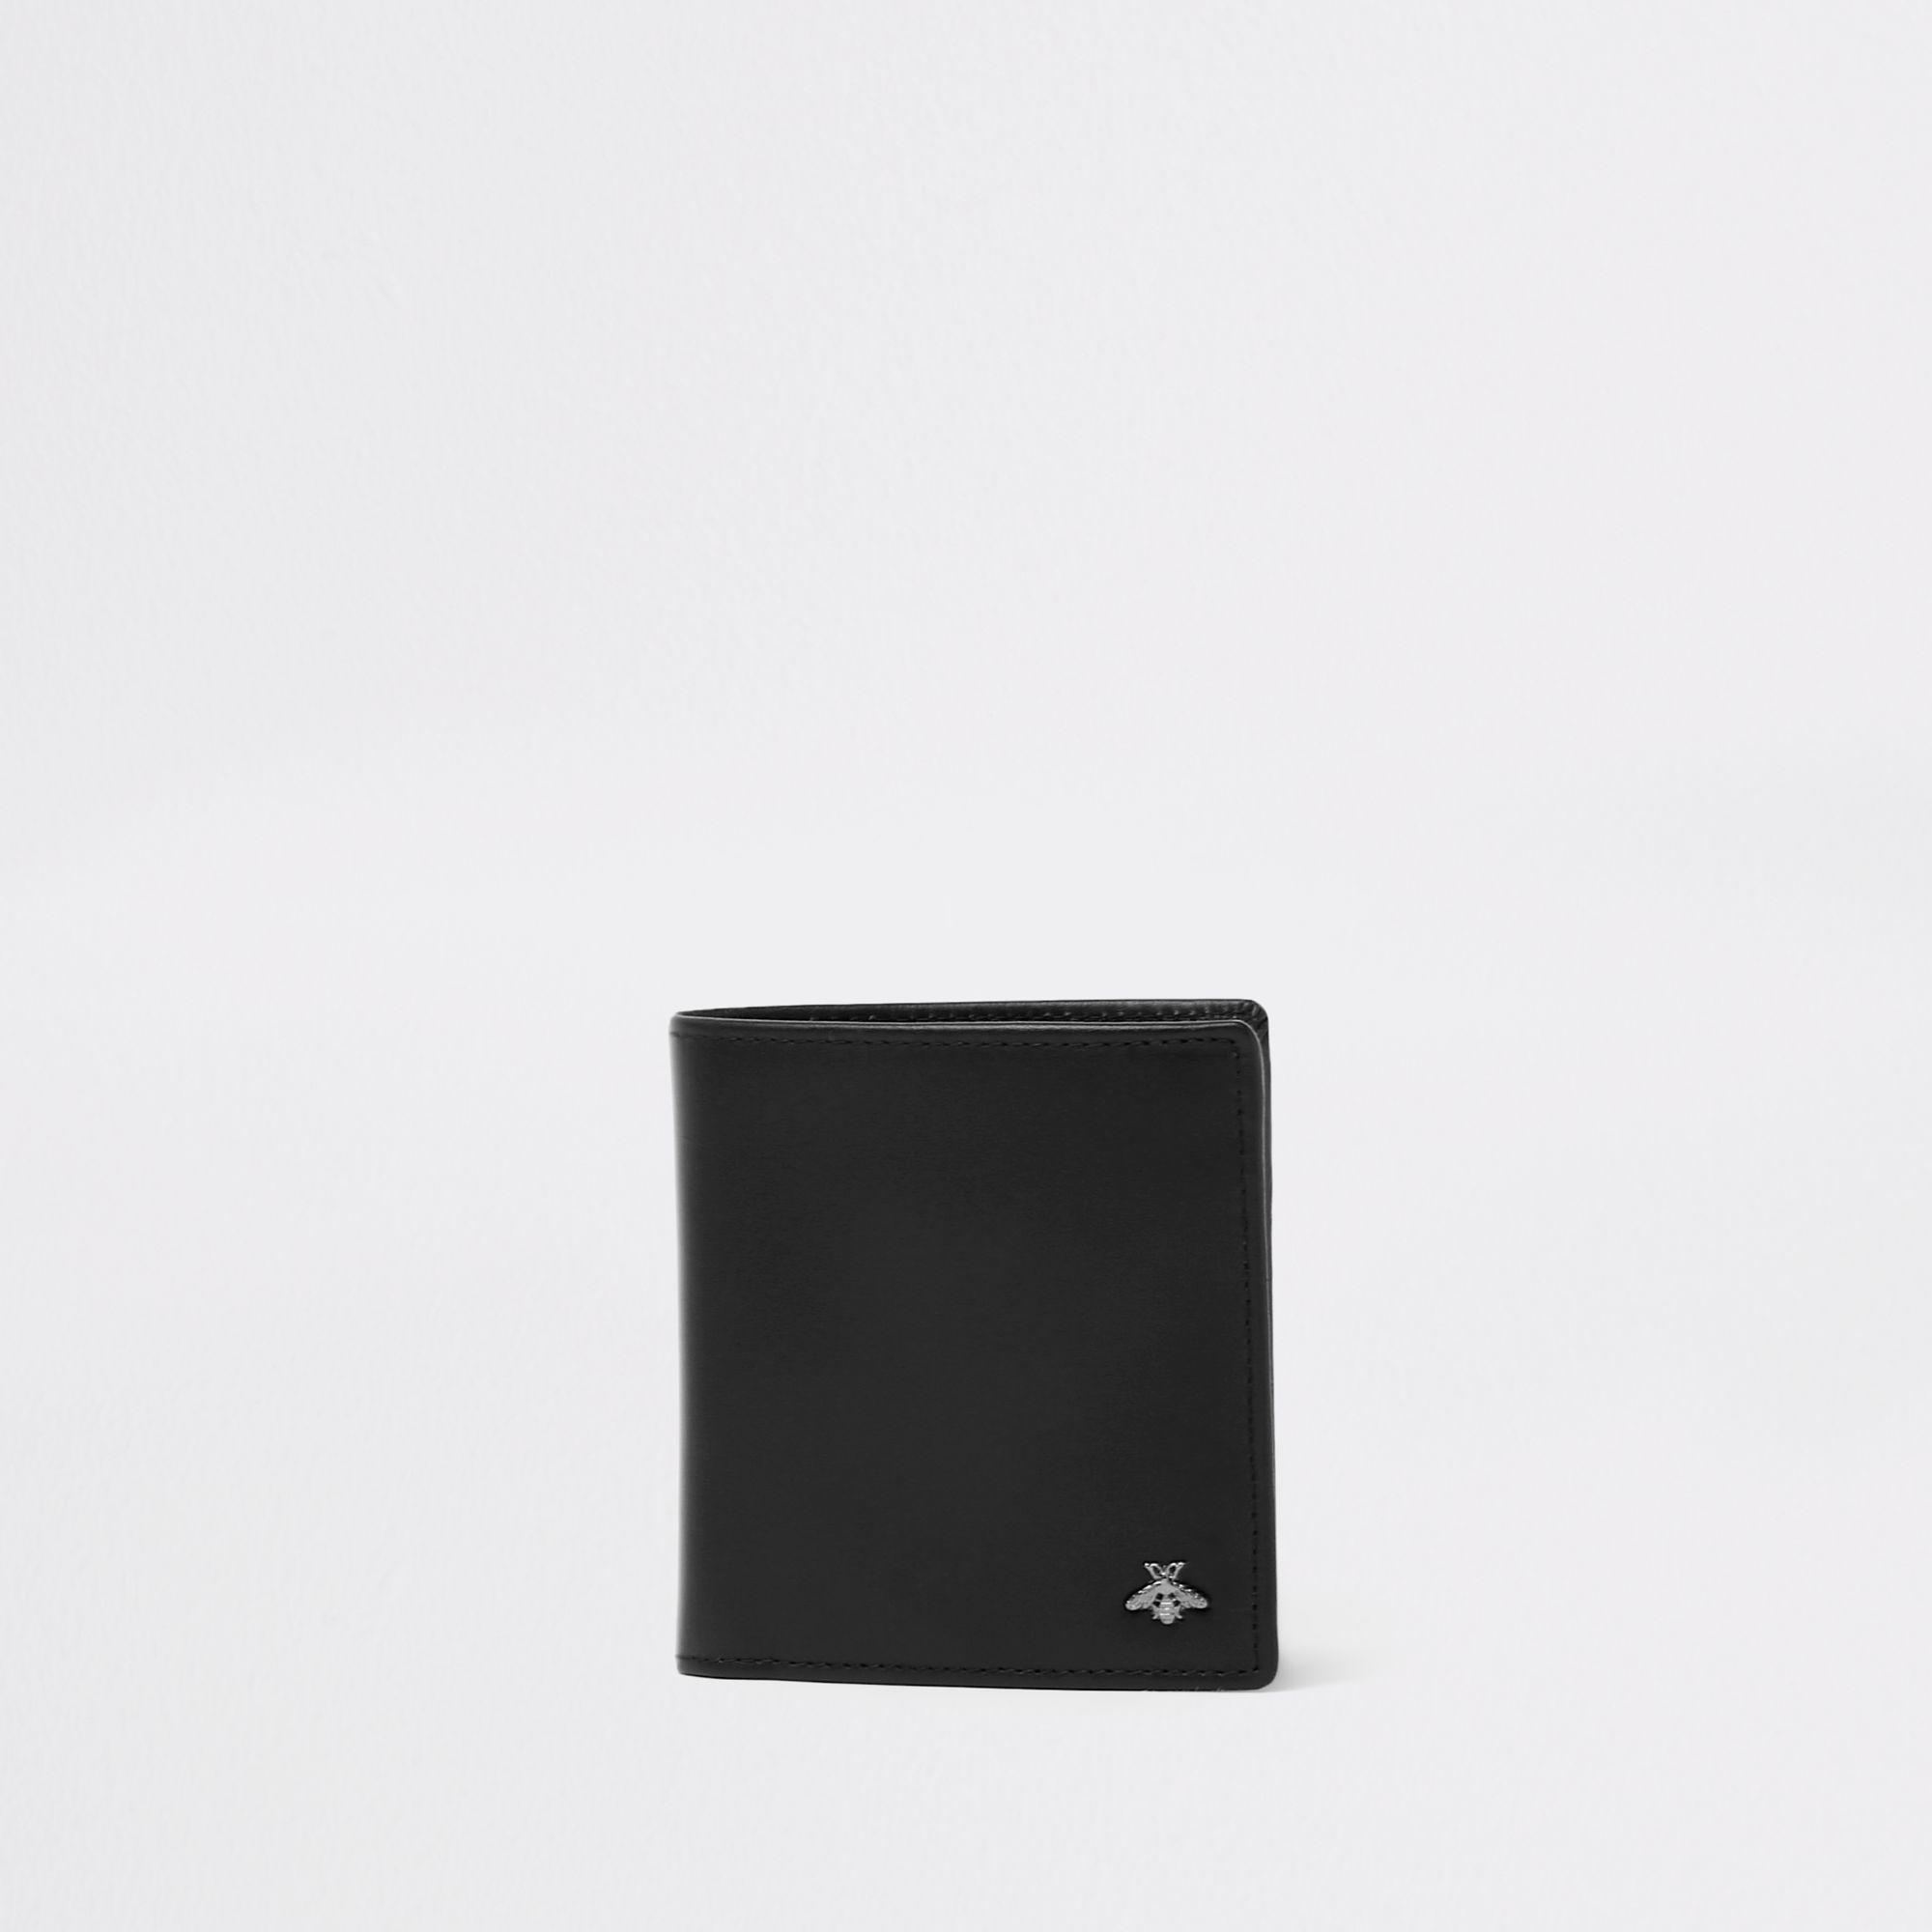 River Island Leather Black Wasp Embellished Fold Out Wallet for Men - Lyst